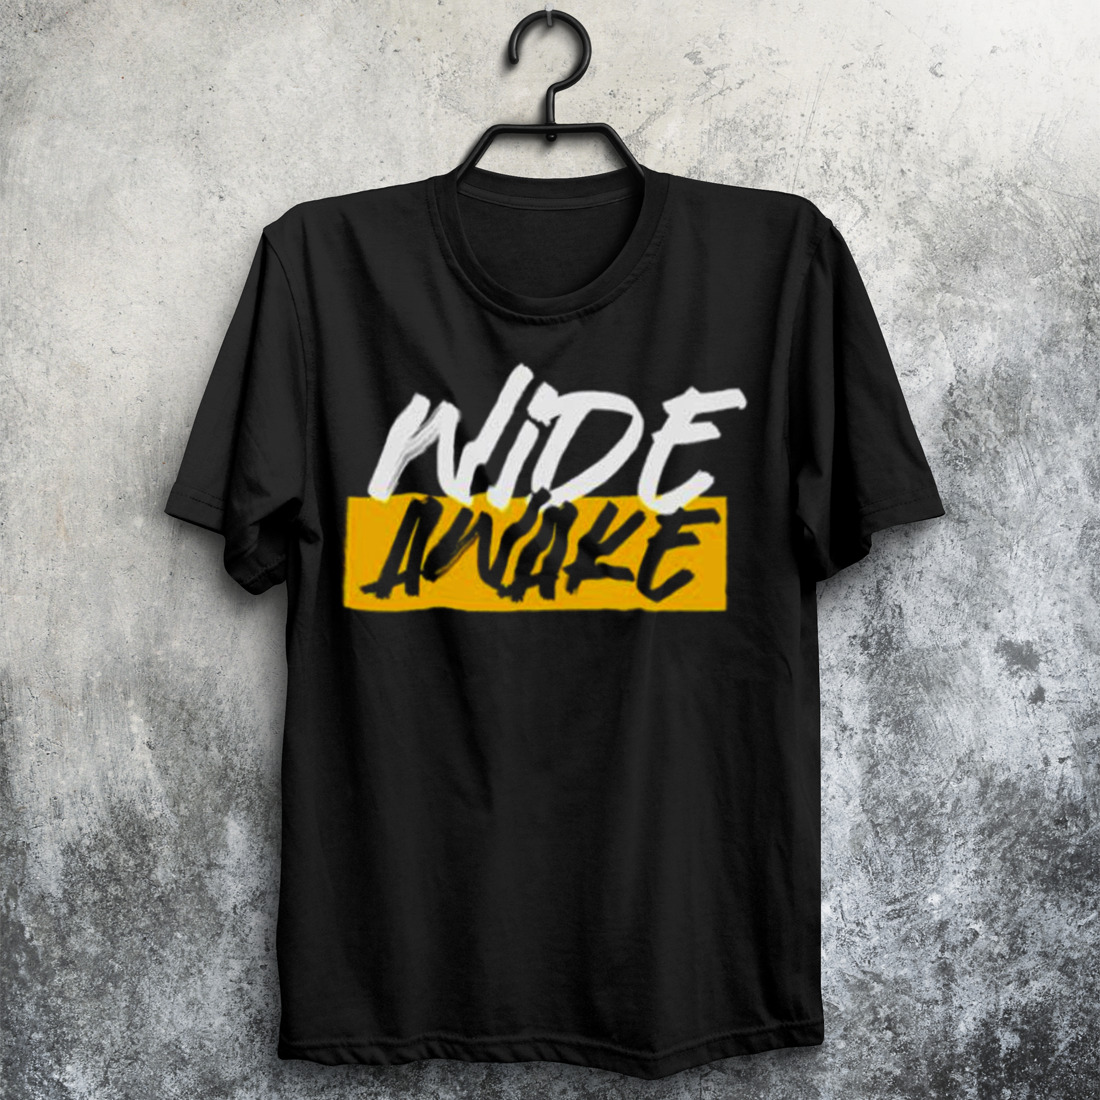 Wide Awake shirt